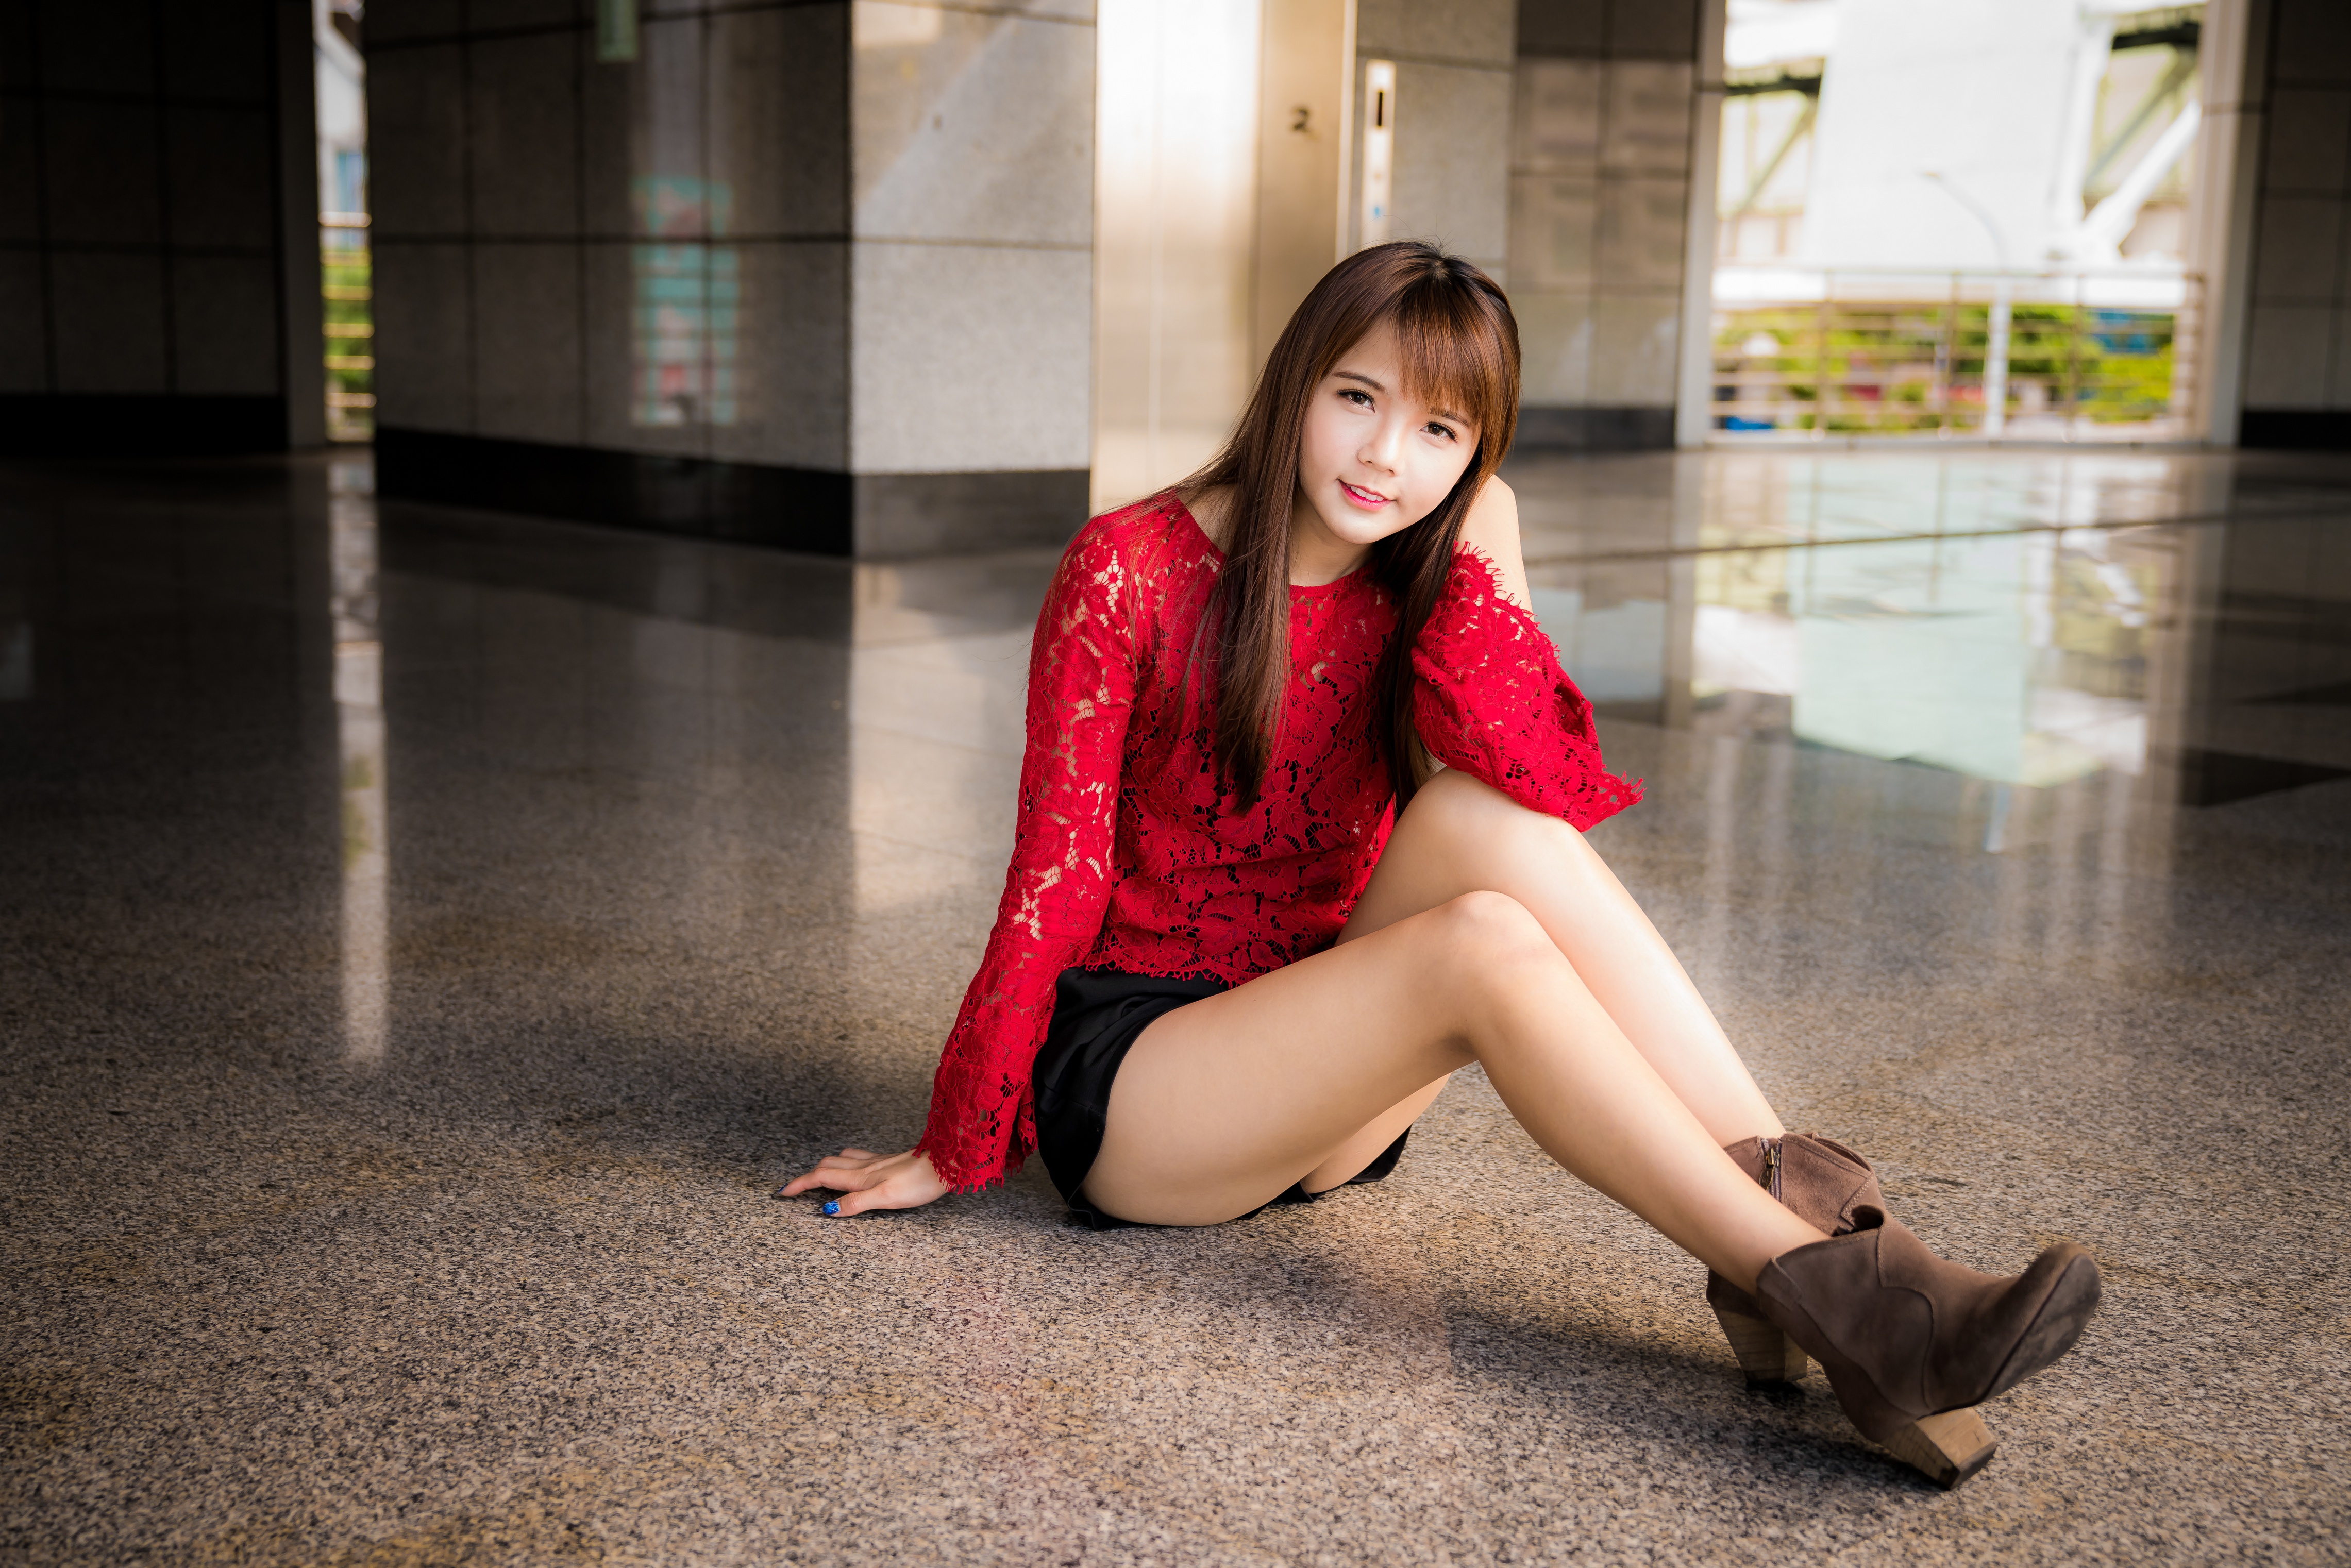 People 4562x3043 Asian women model long hair brunette sitting shorts red shirt indoors granite floor